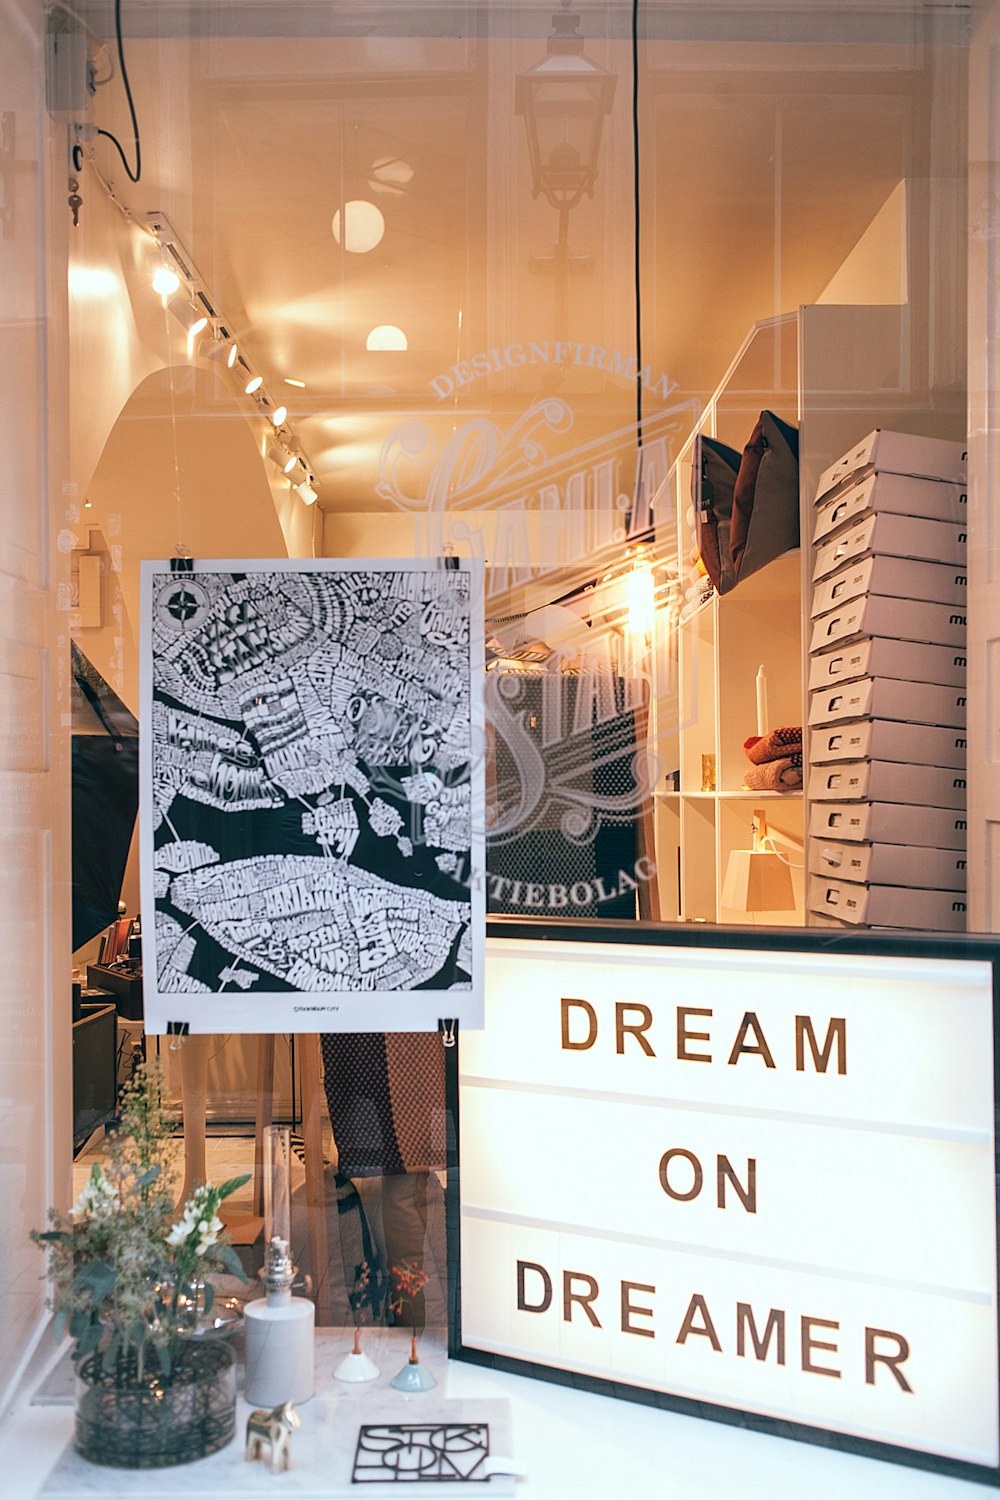 dream on dreamer signage